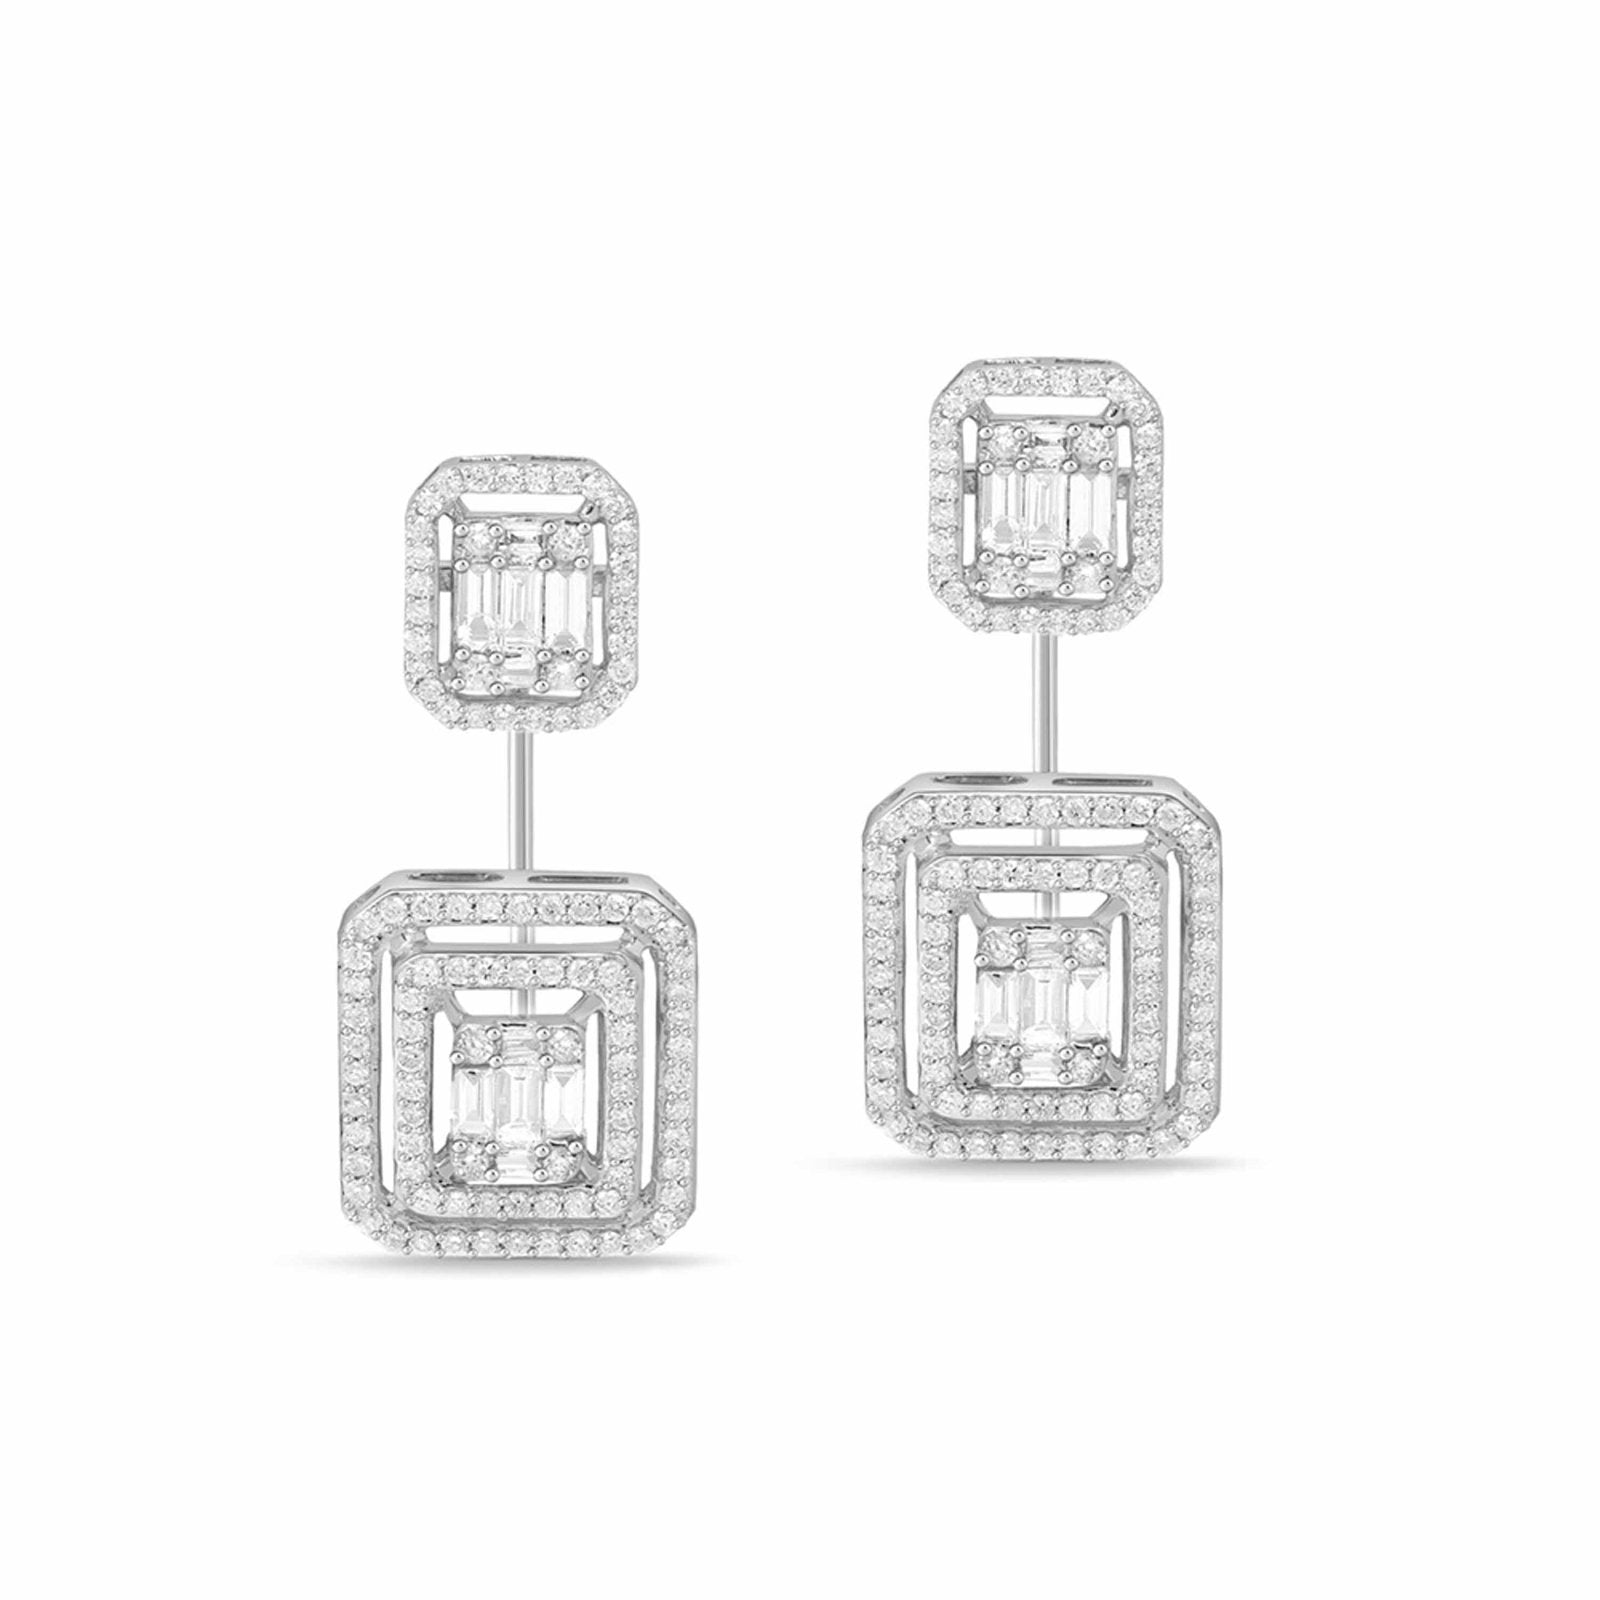 Double Baguette Diamond Hinged Dangle Earrings in Solid 18k White Gold Earrings Estella Collection #product_description# 18k Birthstone Birthstone Earrings #tag4# #tag5# #tag6# #tag7# #tag8# #tag9# #tag10#